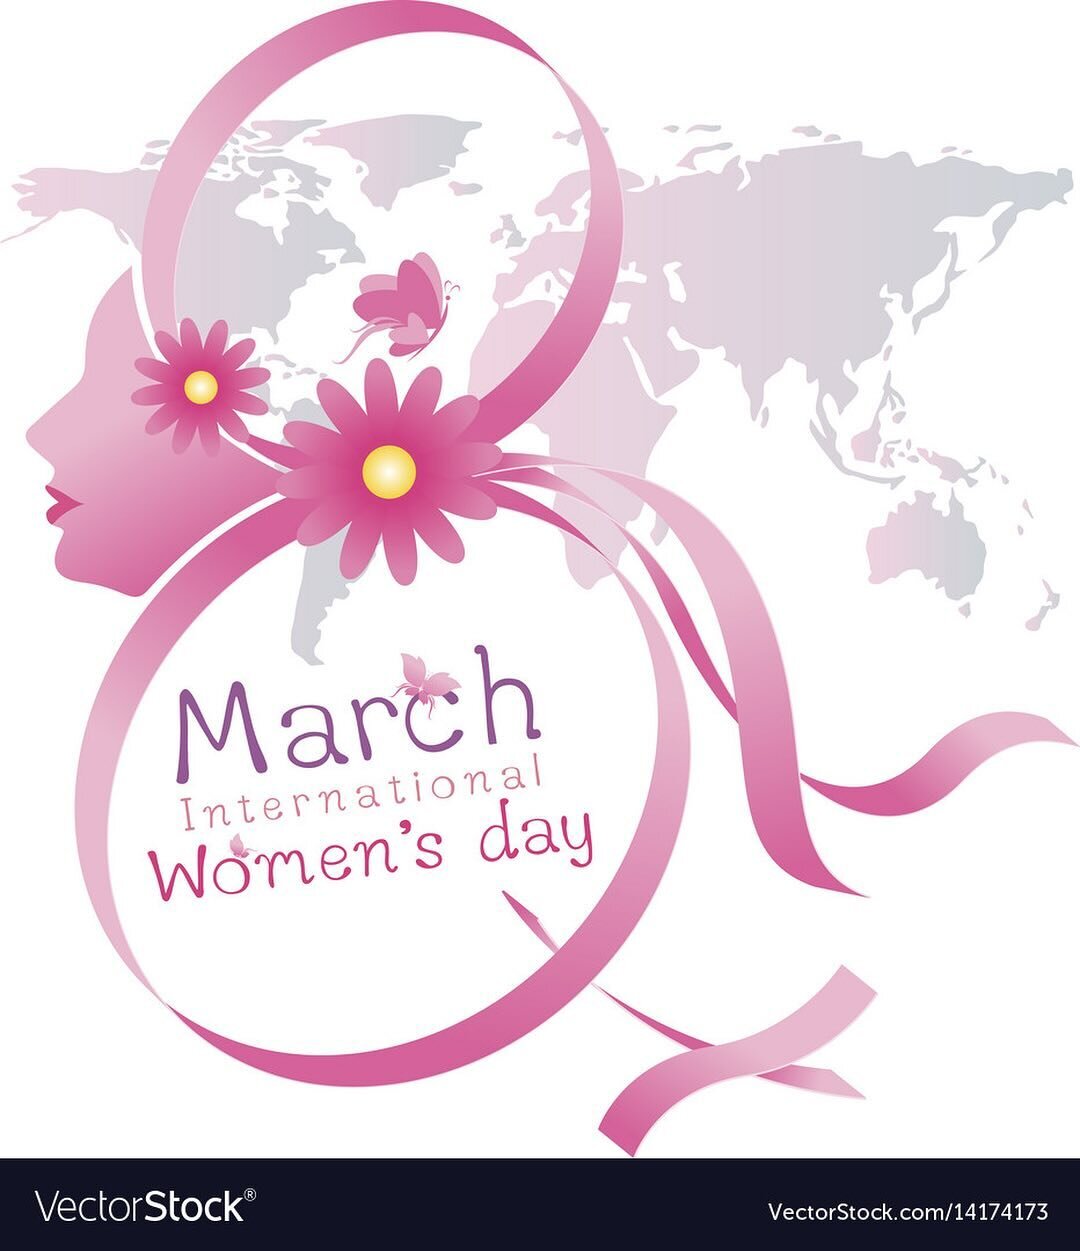 Happy International Women&rsquo;s Day 💕💐😘🤗. #internationalwomensday